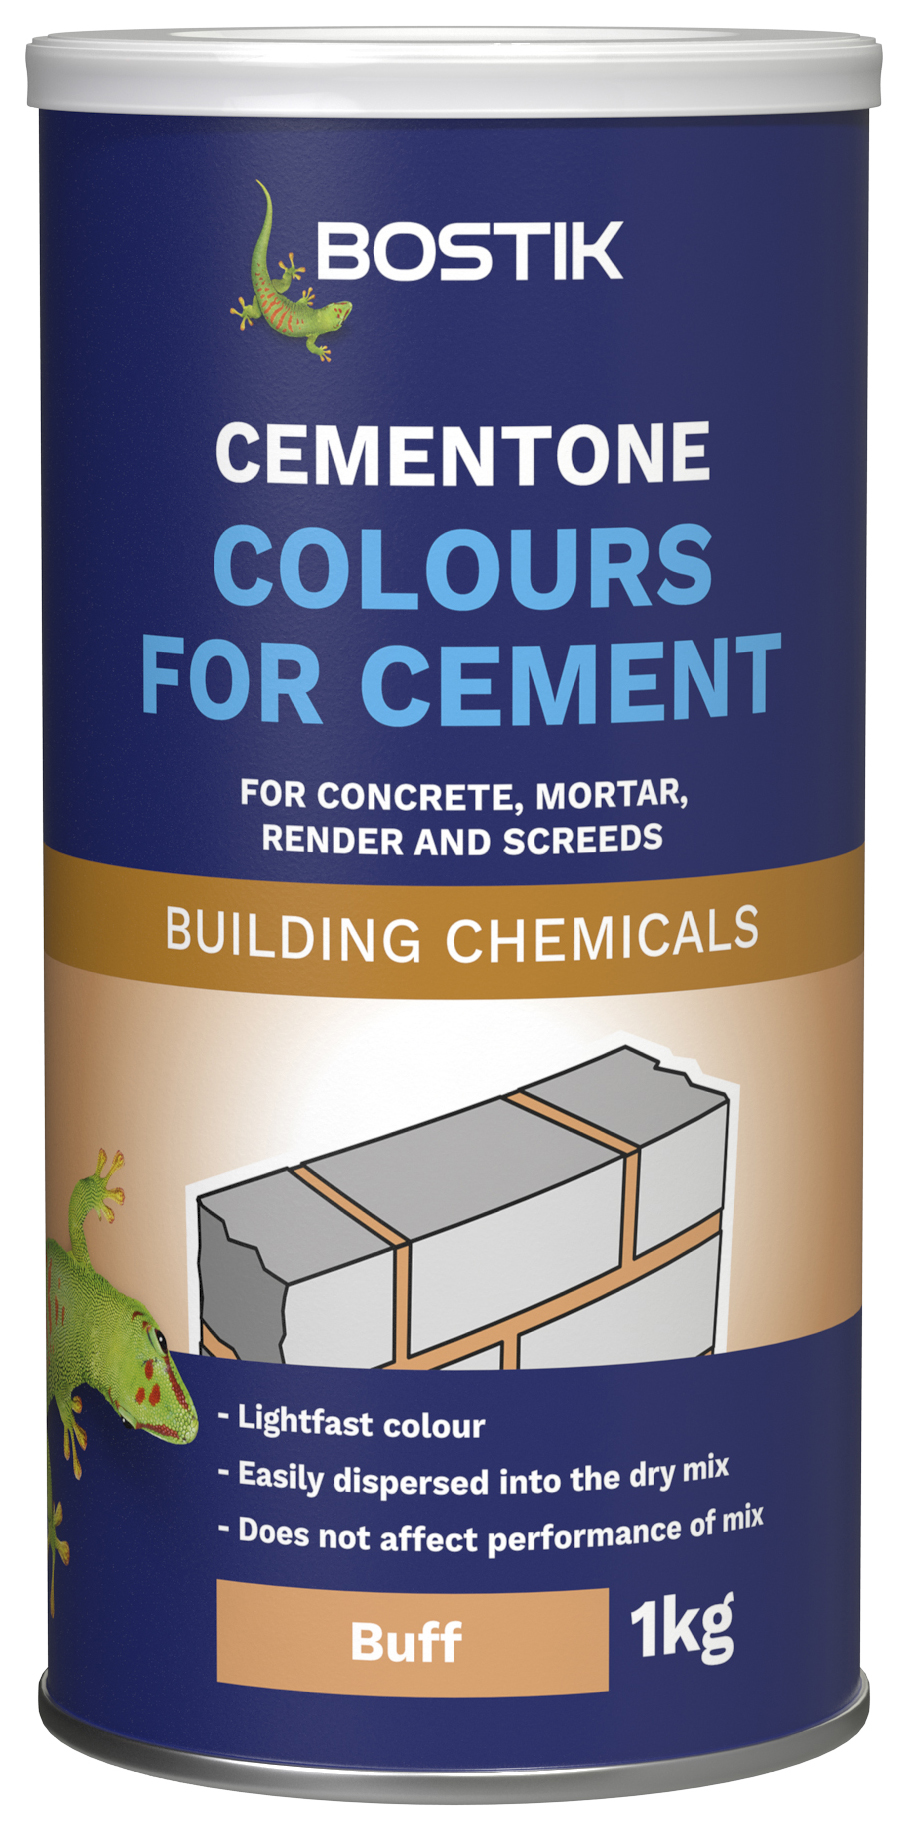 Image of Bostik 1kg Cementone Colours for Cement - Buff